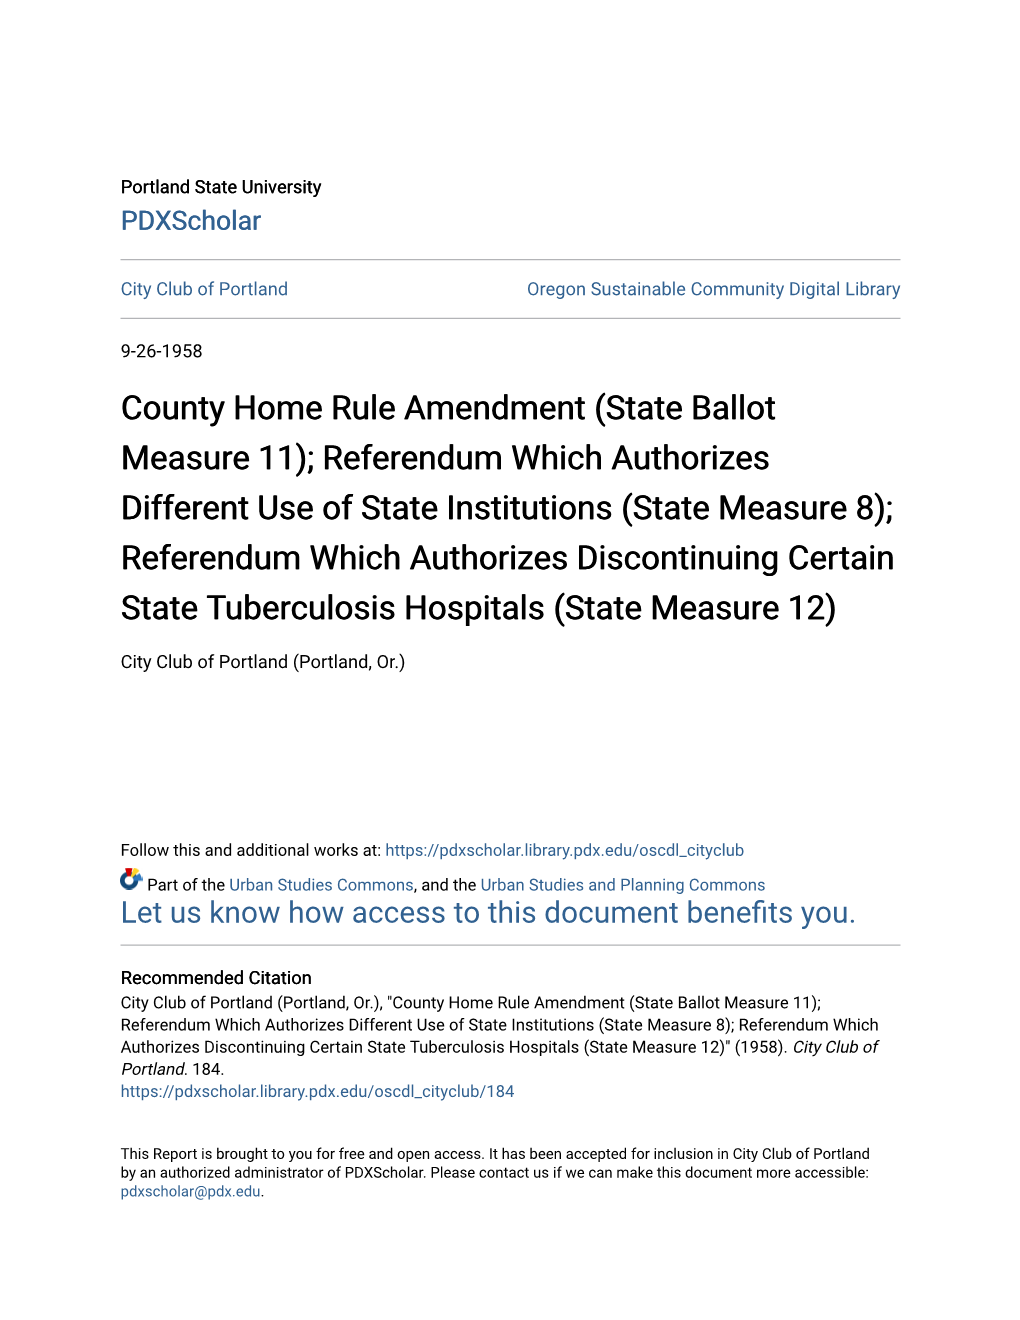 County Home Rule Amendment (State Ballot Measure 11